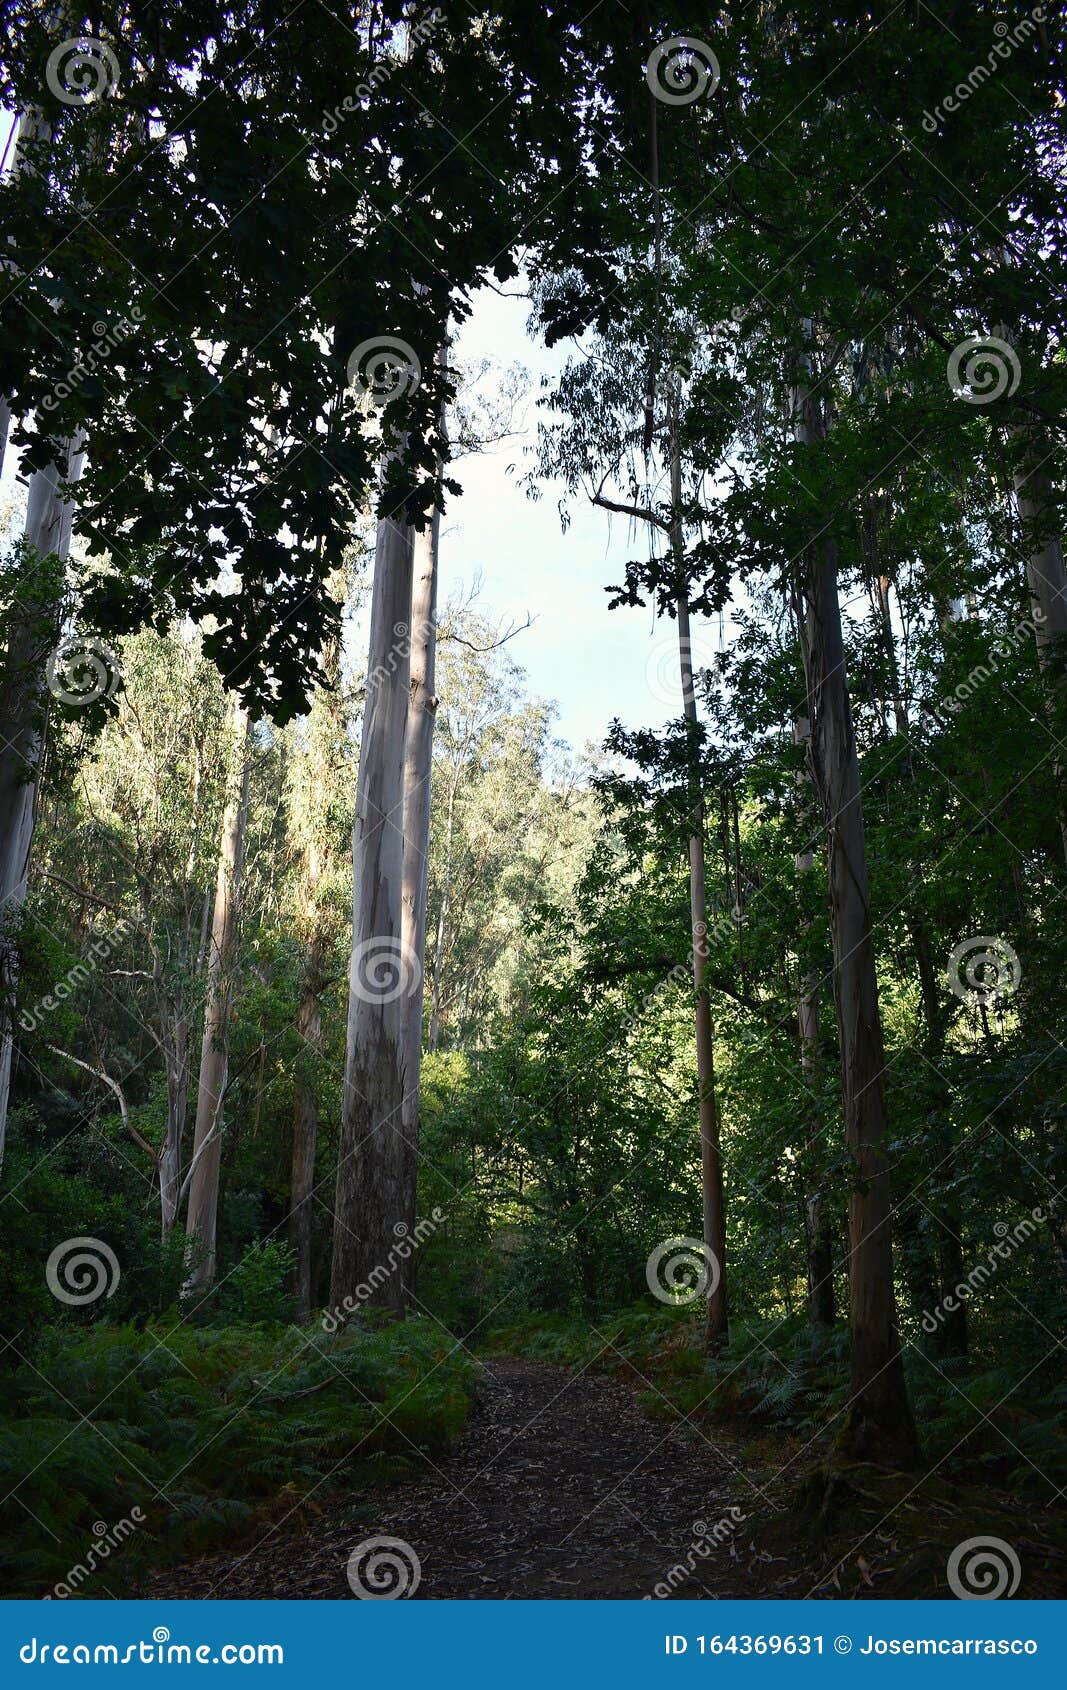 souto da retorta, also known as the chavin eucalyptus, in vivero, galicia. spain.